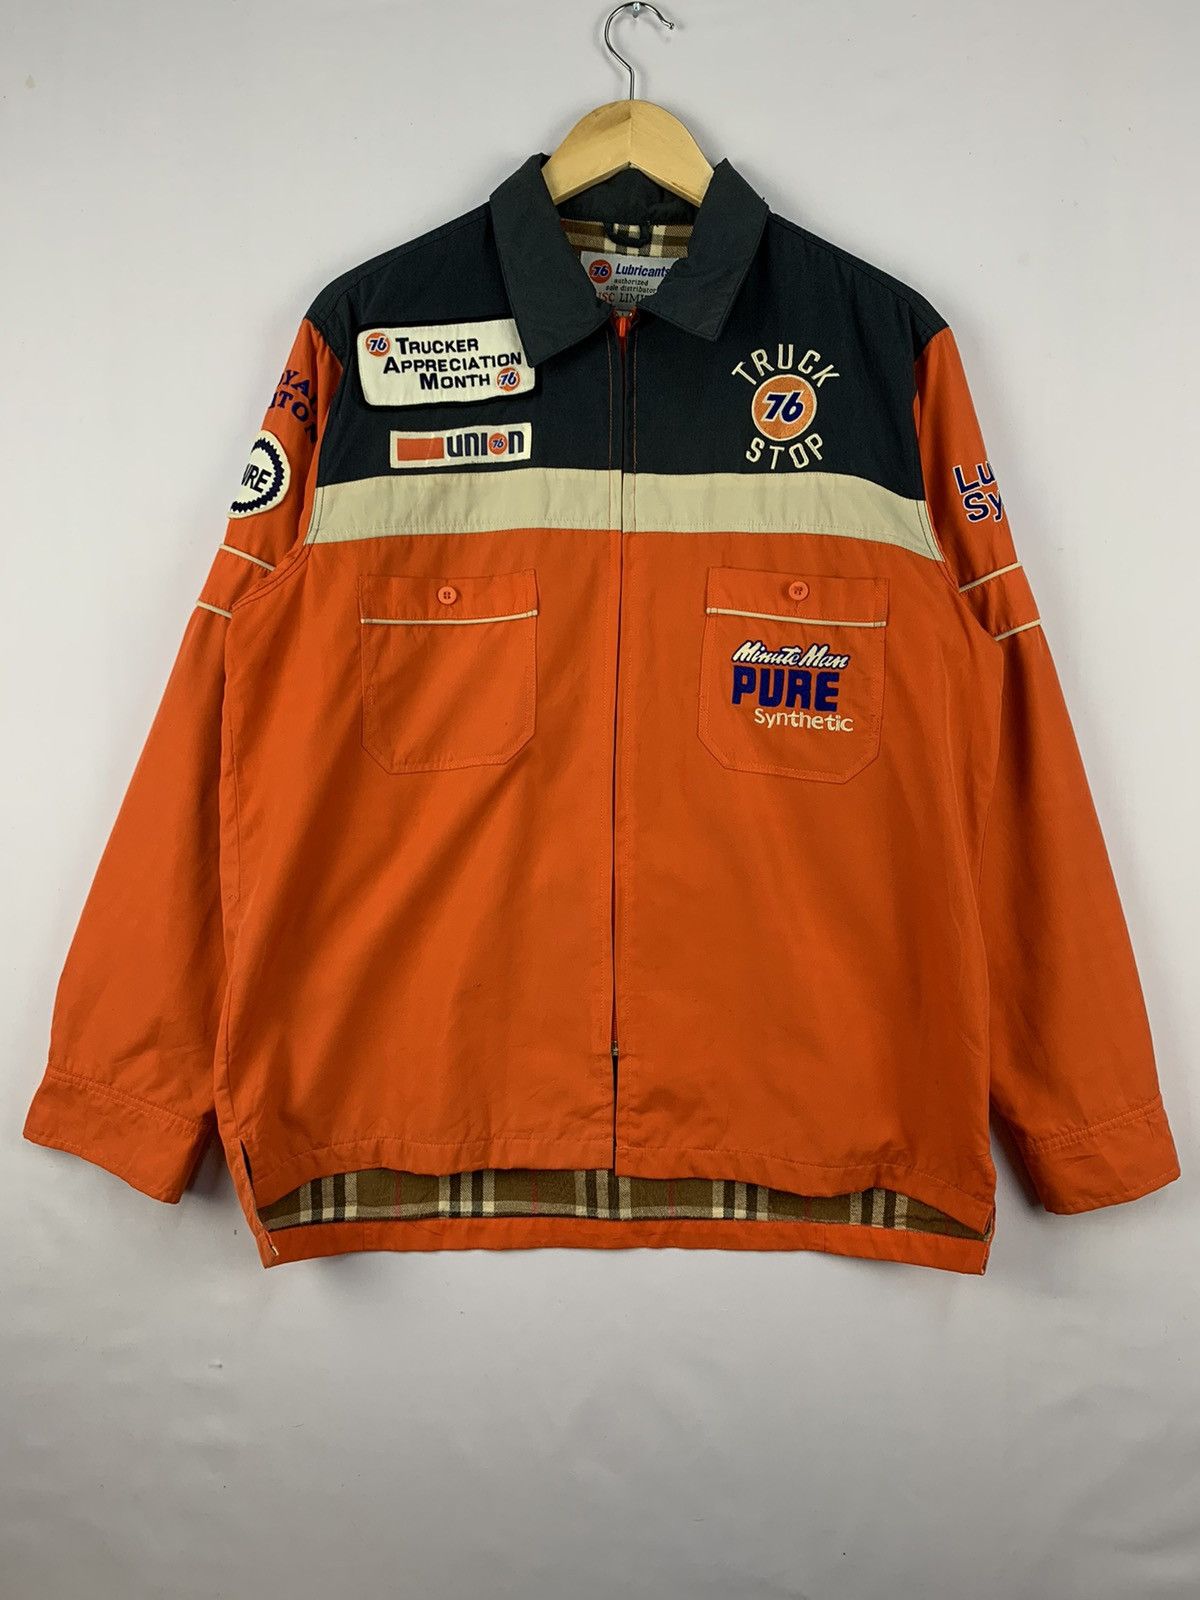 Pre-owned Racing X Union 76 Union Racing Trucker Jacket Orange Large